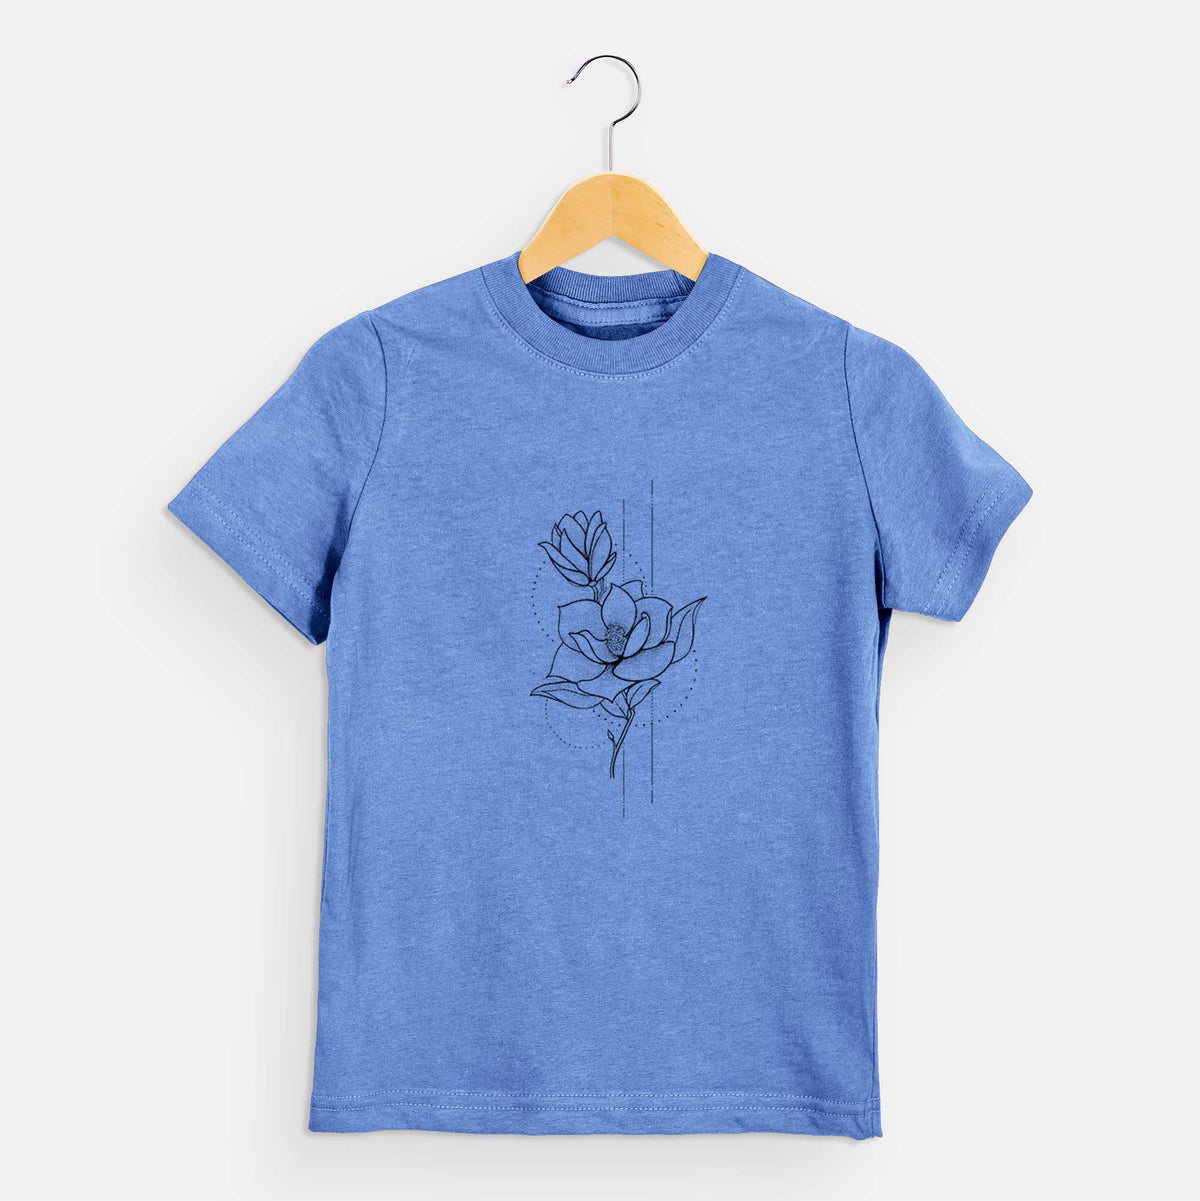 Southern Magnolia Stem - Kids Shirt